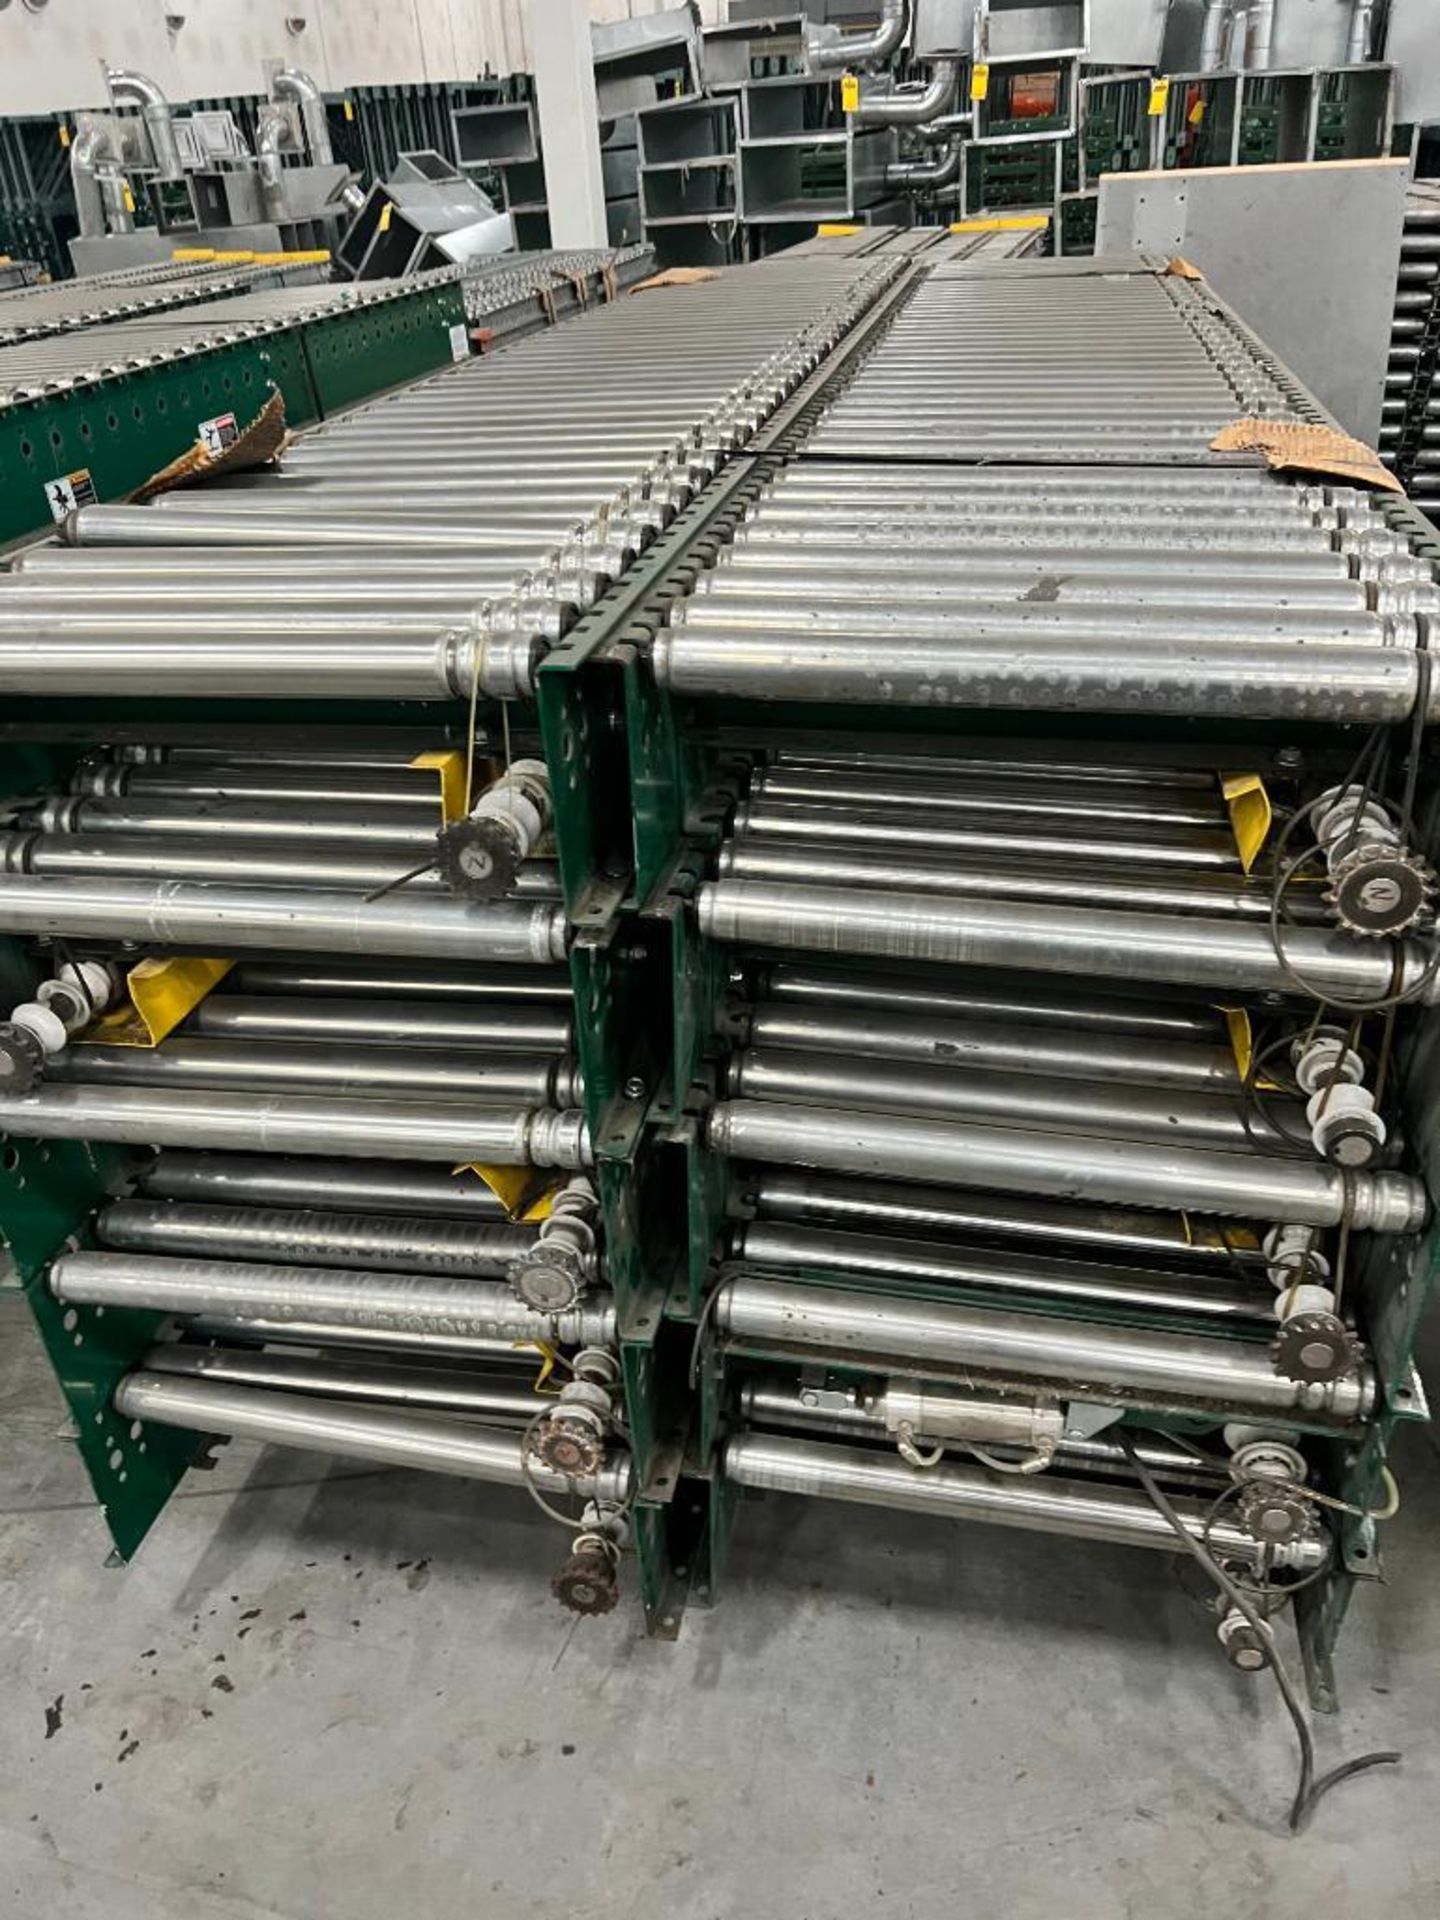 (30x) Rapistan Demag Automatic Pressure Roller Conveyors, 21-1/2" x 10' - Image 3 of 4